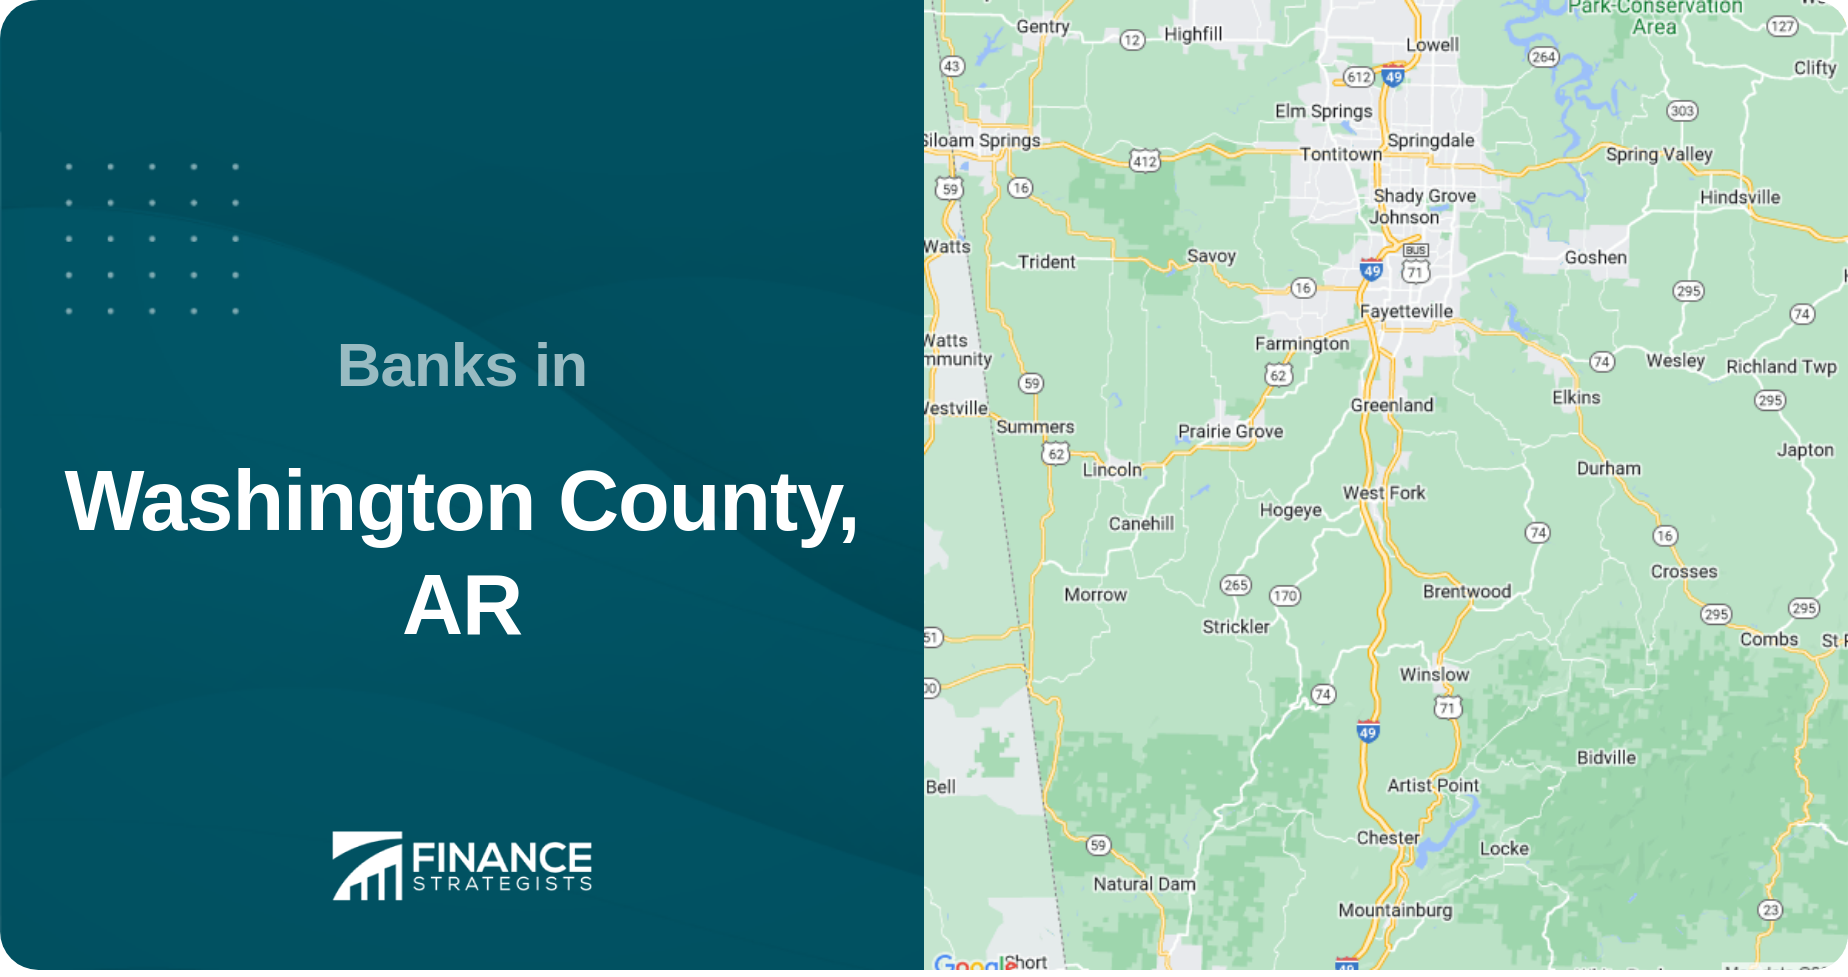 Banks in Washington County, AR